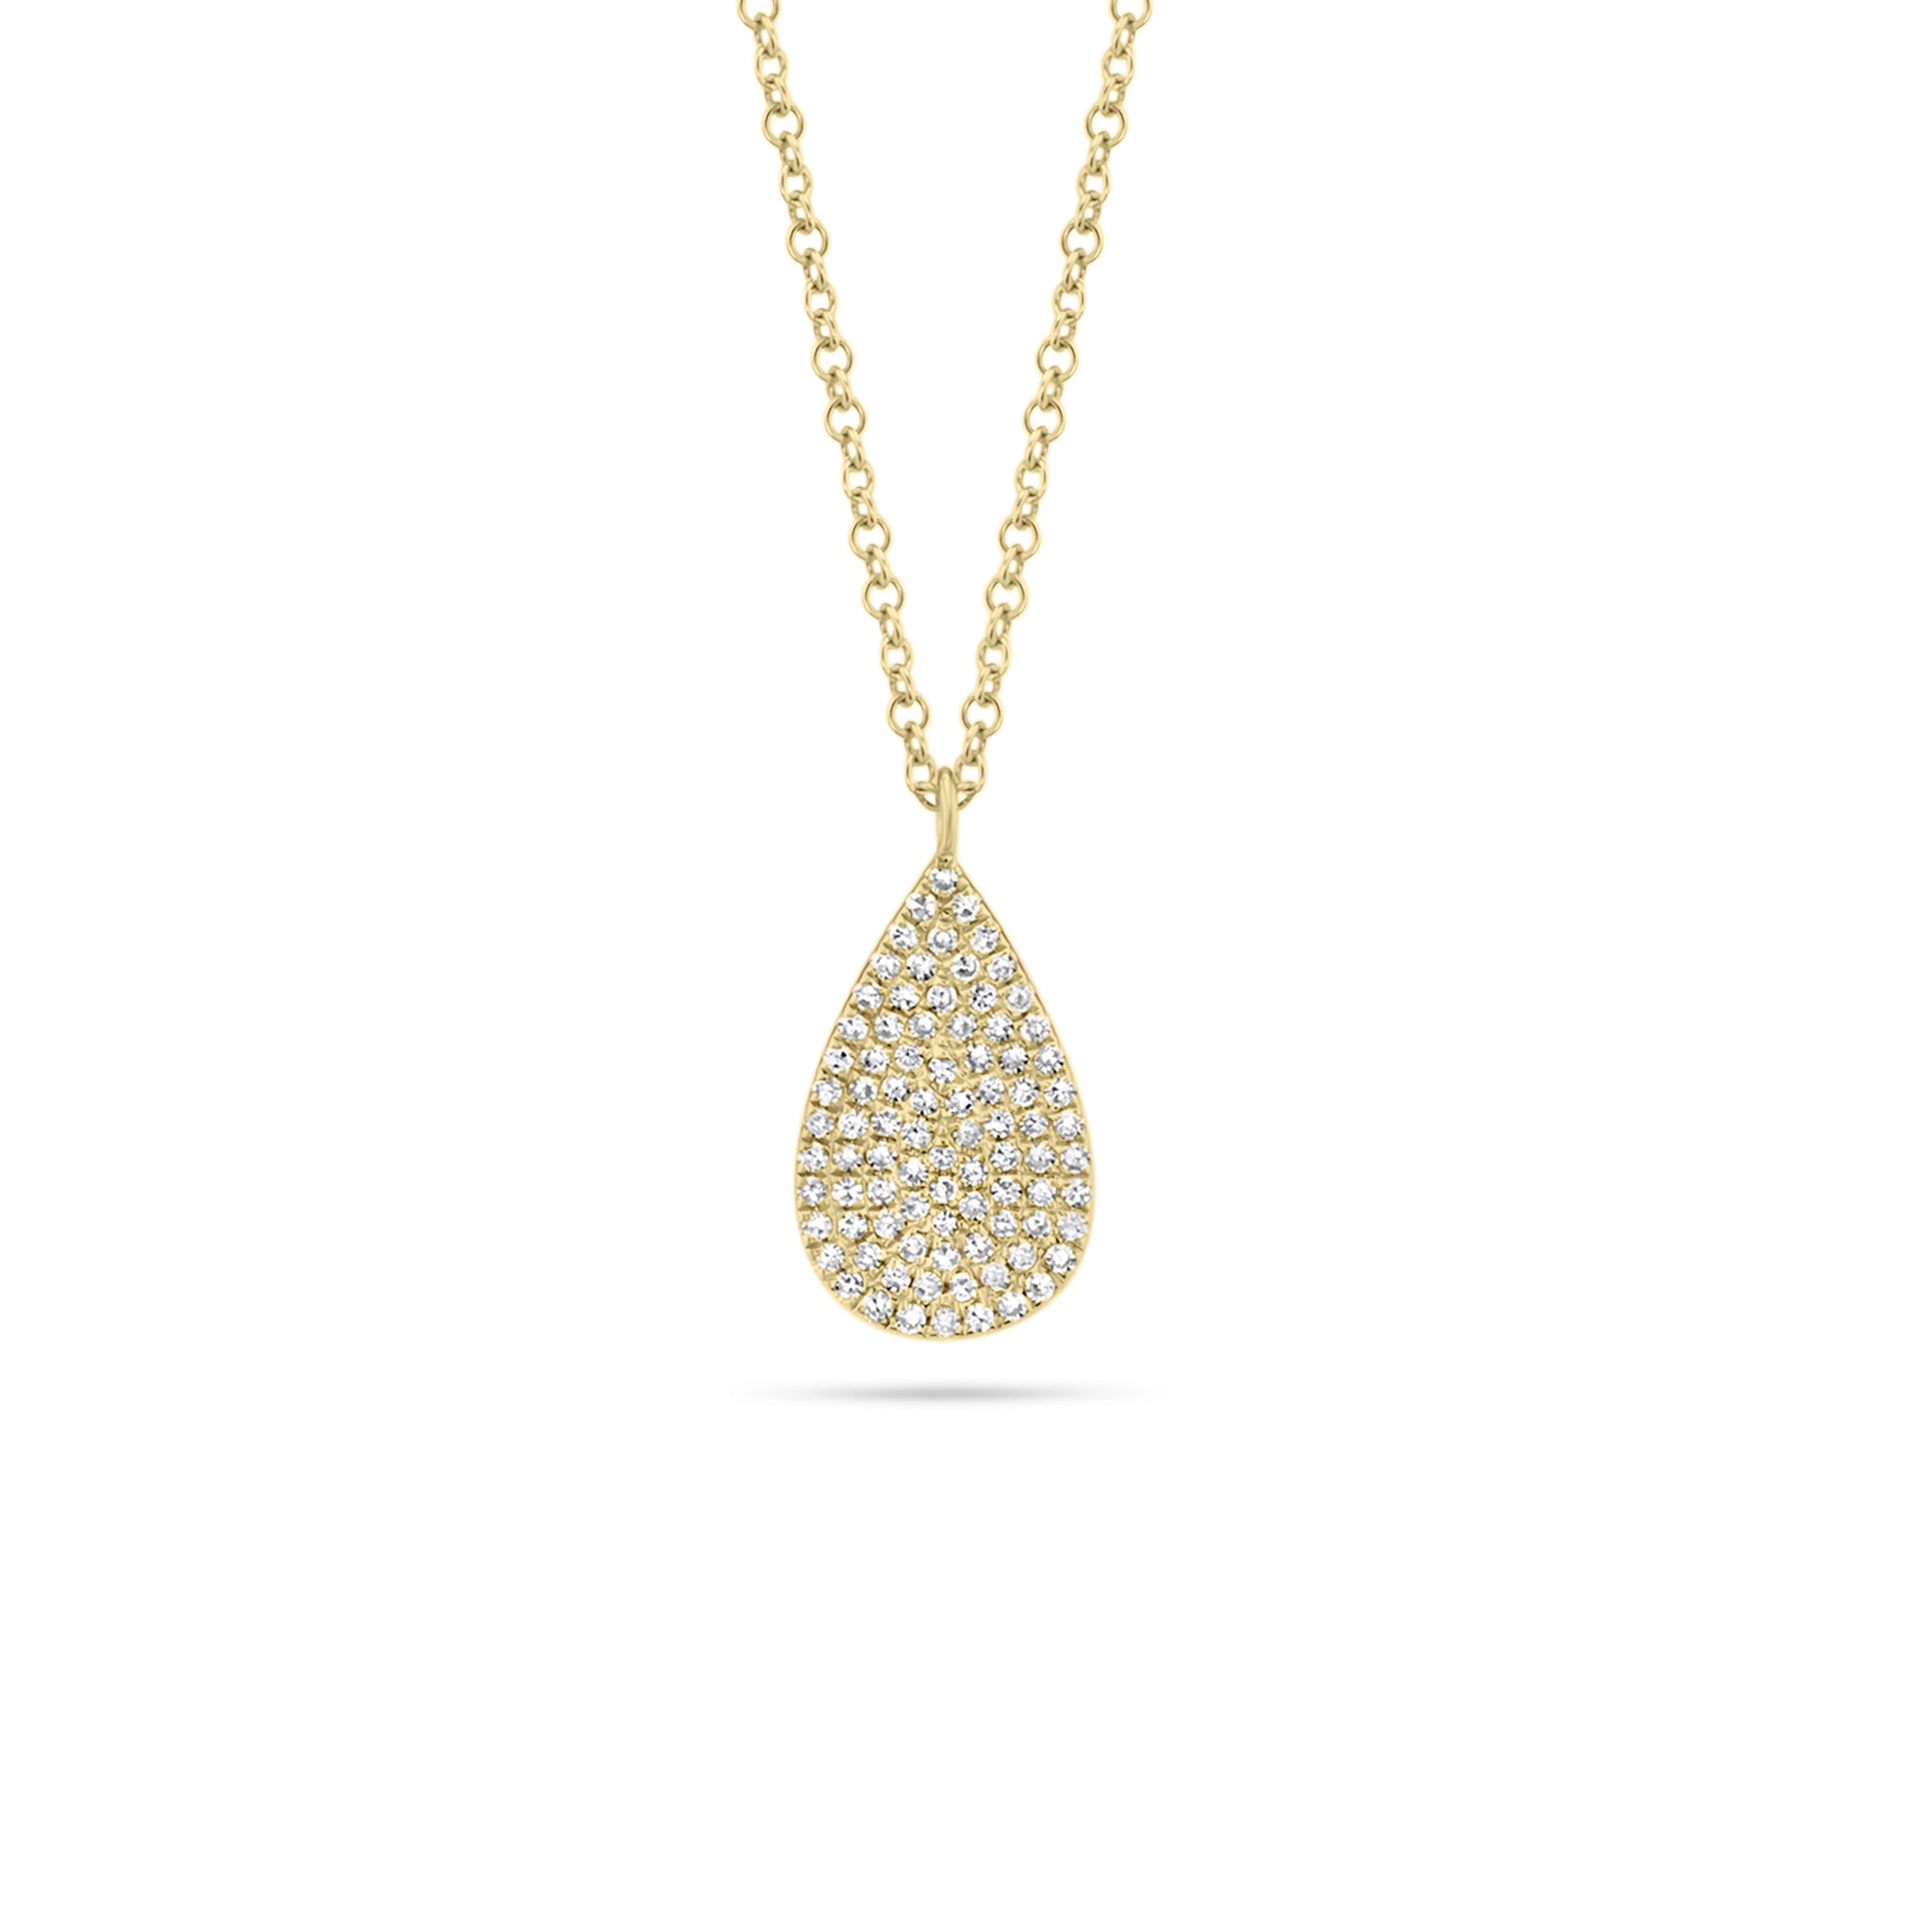 Pave Diamond Teardrop Pendant - 14K yellow gold - 0.19 cts round diamonds